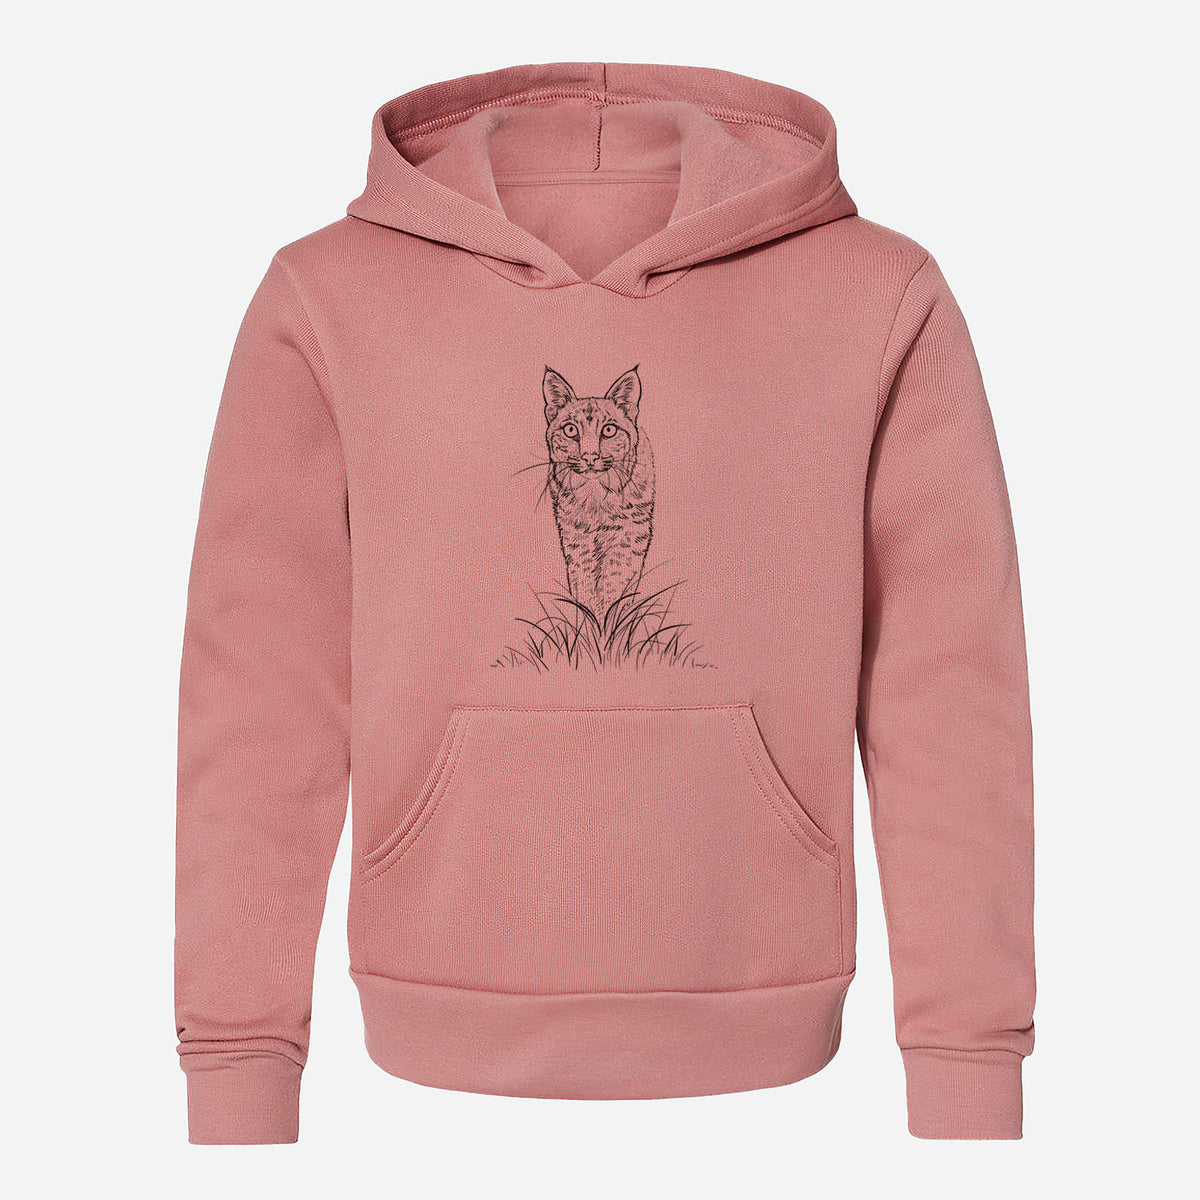 Bobcat - Lynx rufus - Youth Hoodie Sweatshirt